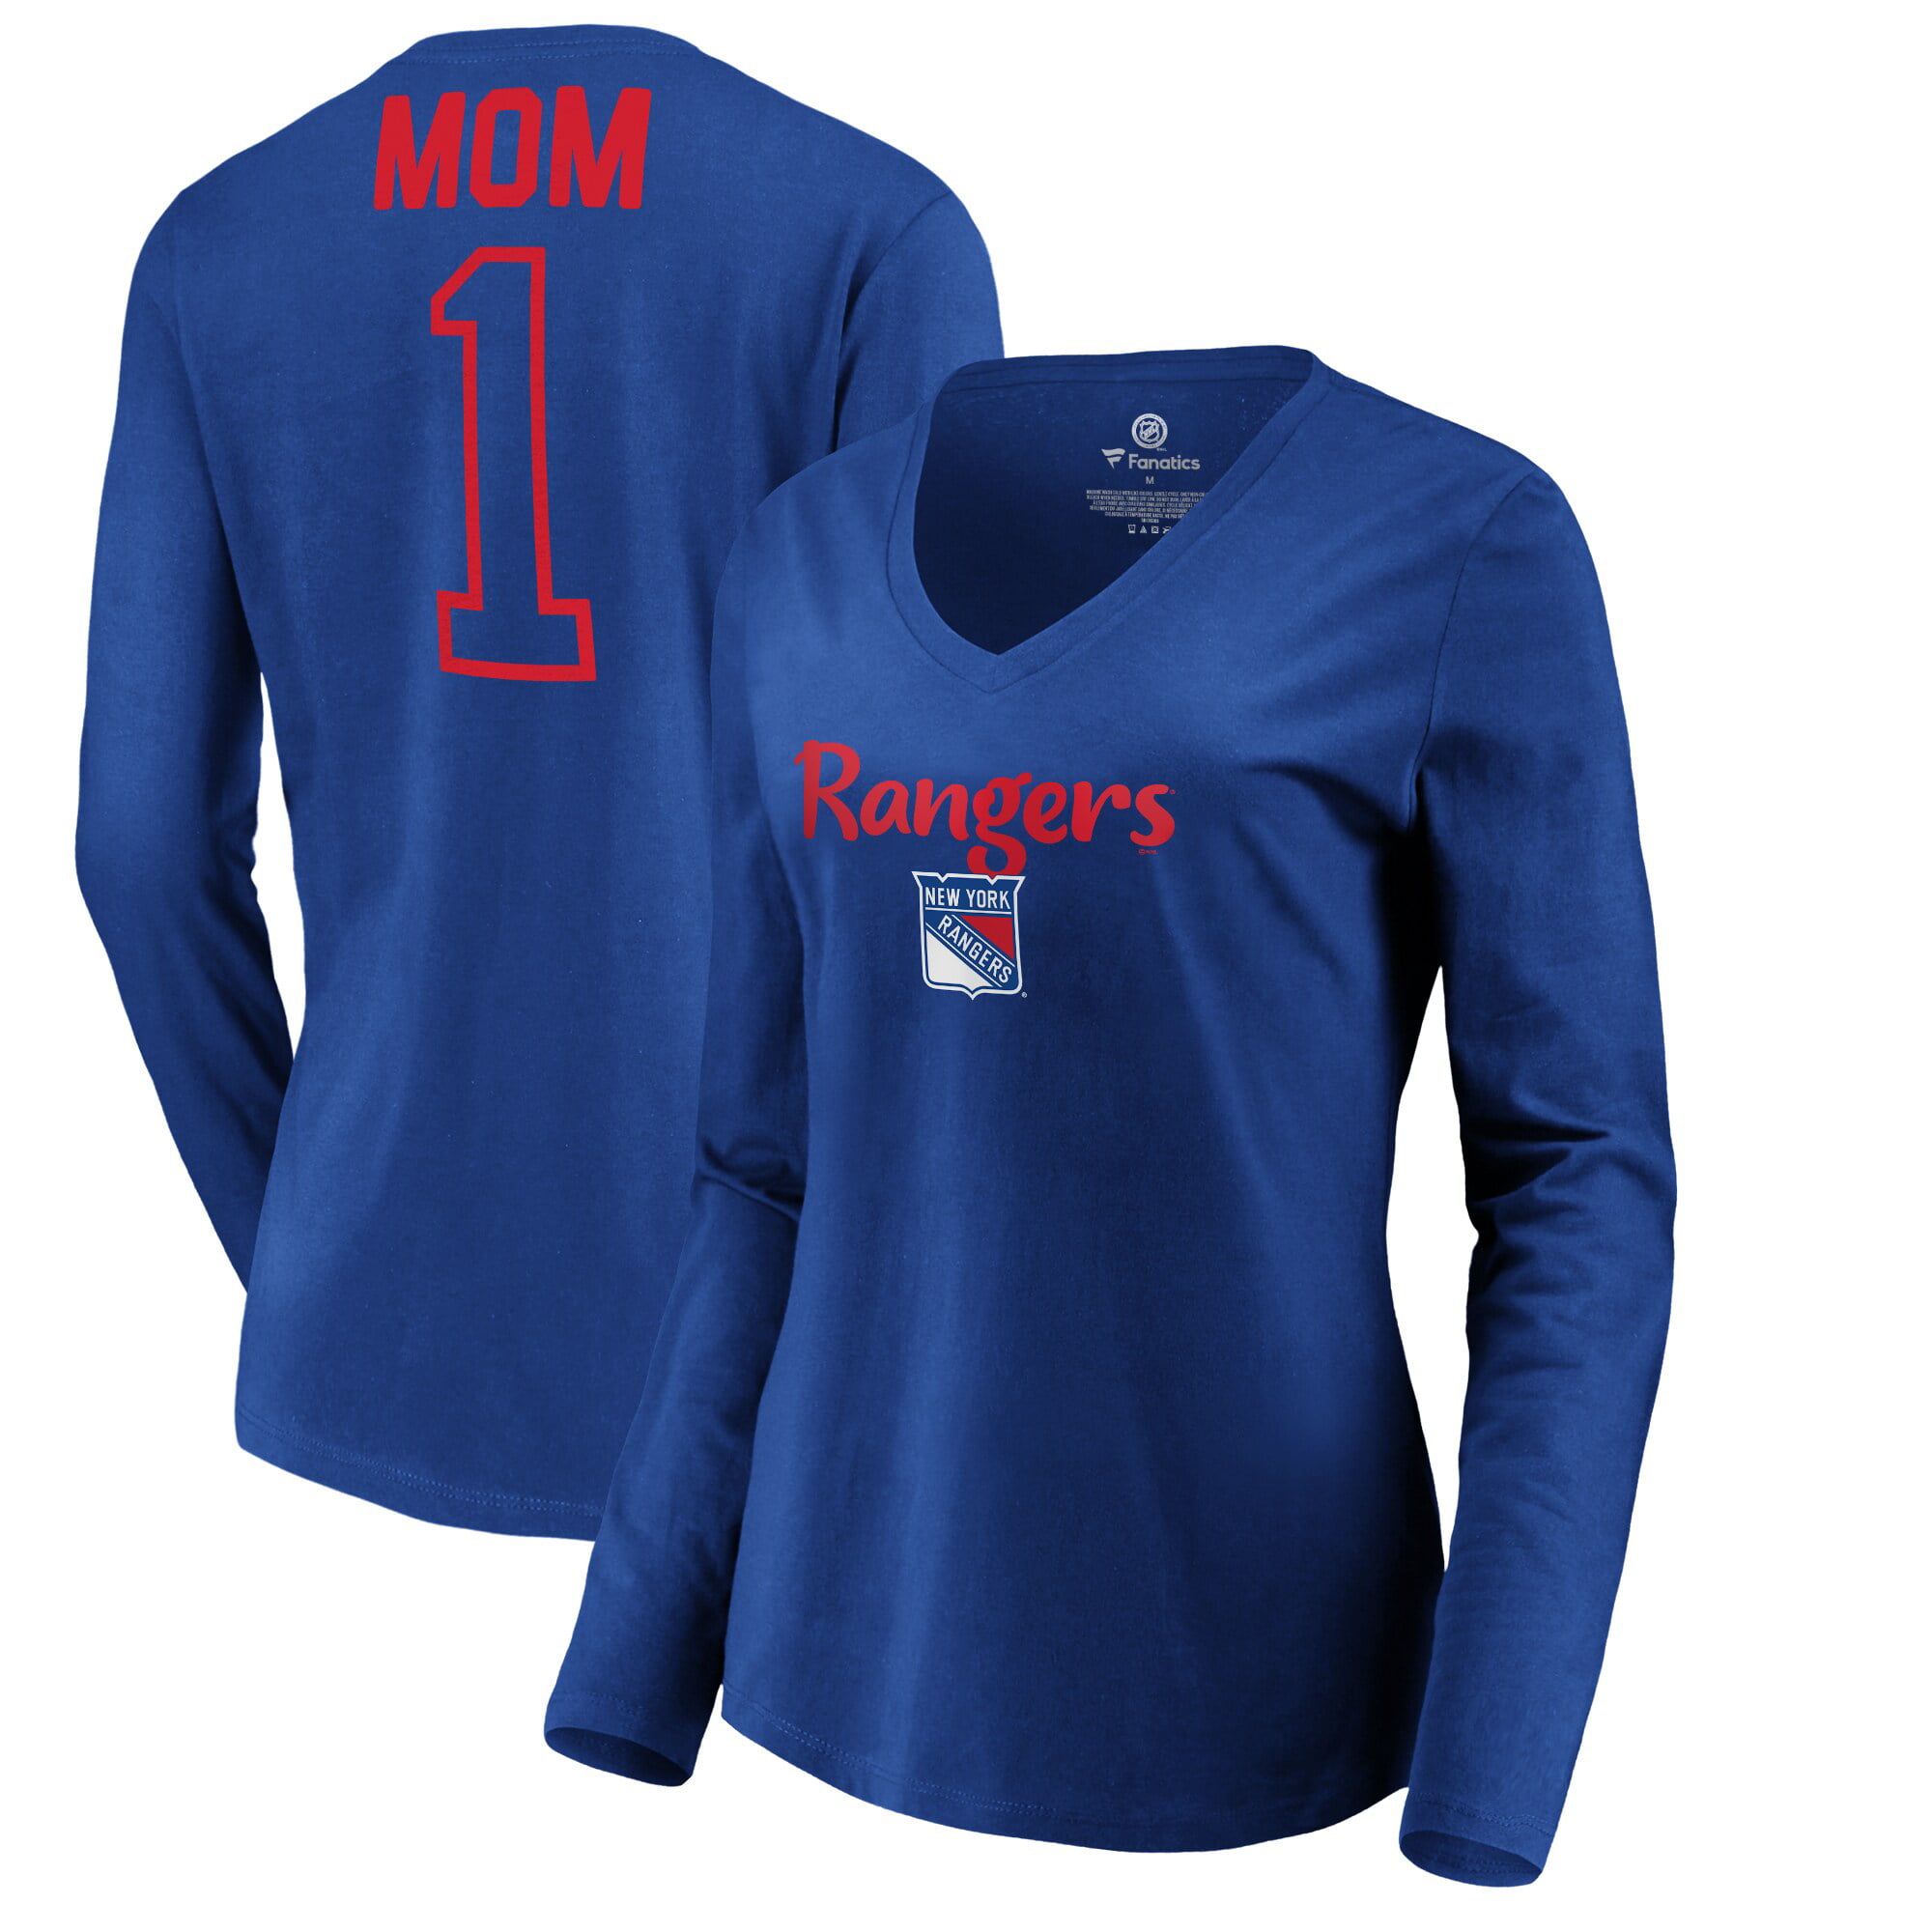 Mom V-Neck Long Sleeve T-Shirt - Blue 